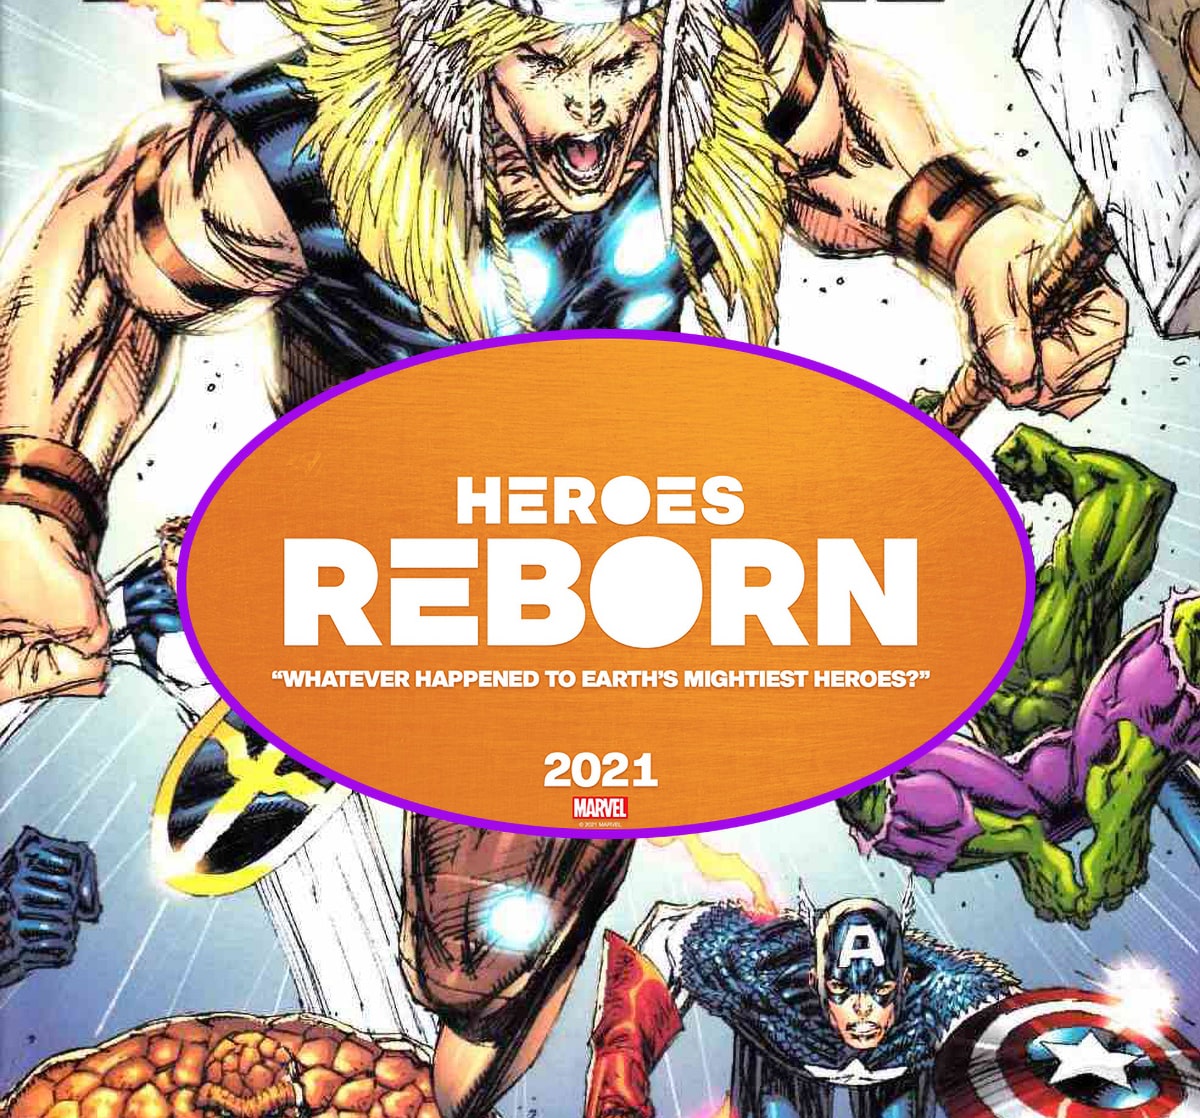 Marvel Comics launching 'Heroes Reborn' in 2021